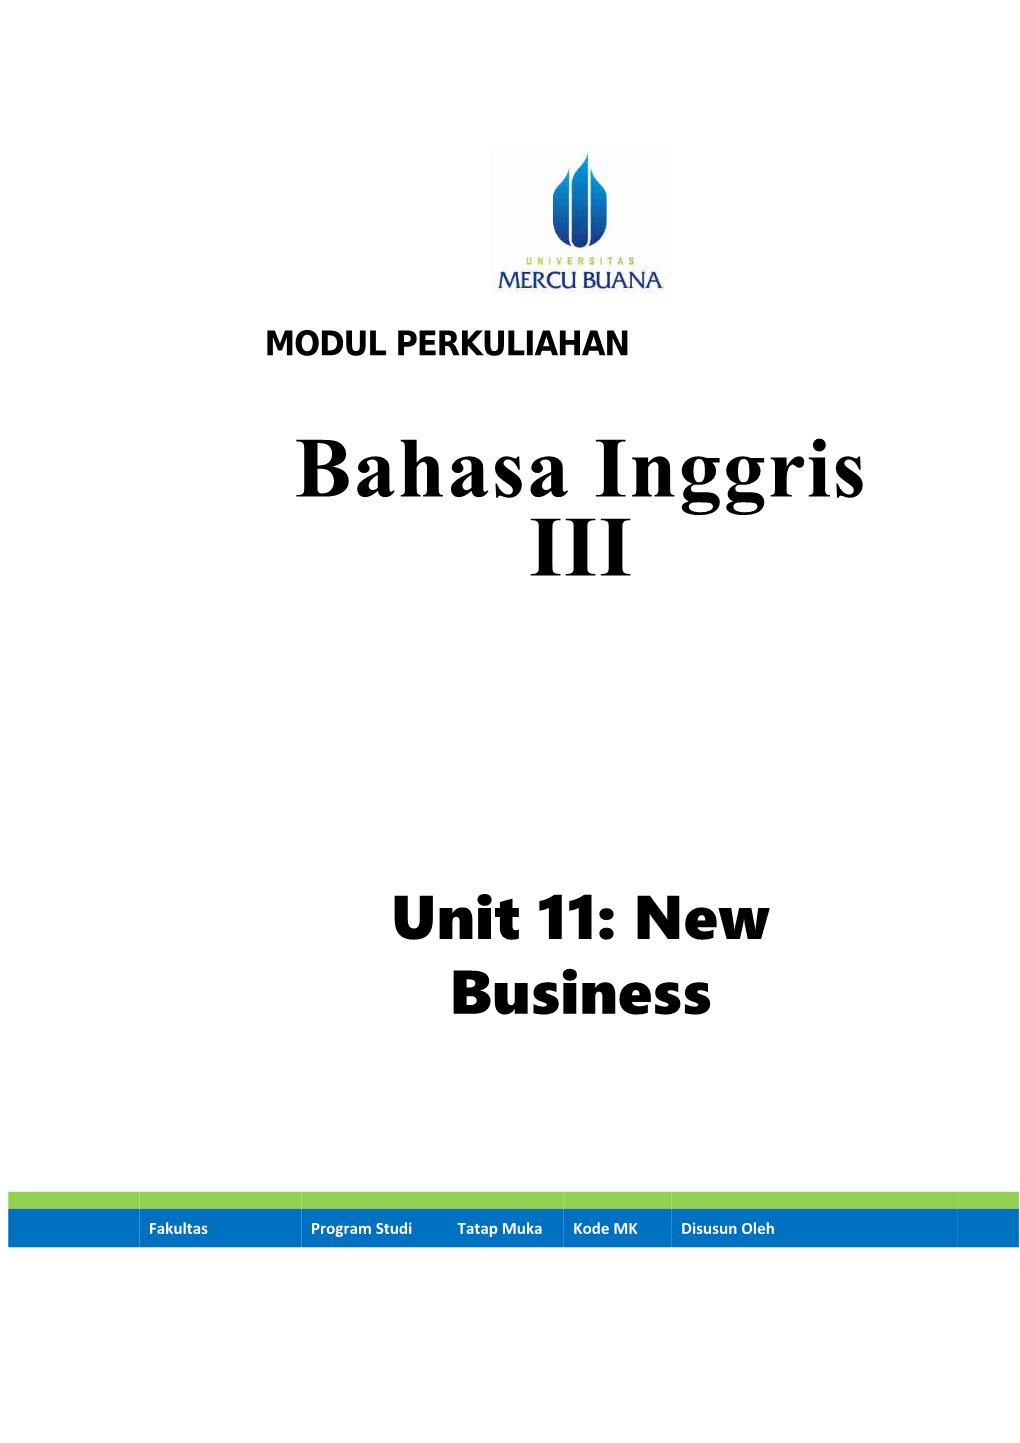 Unit 11: New Business